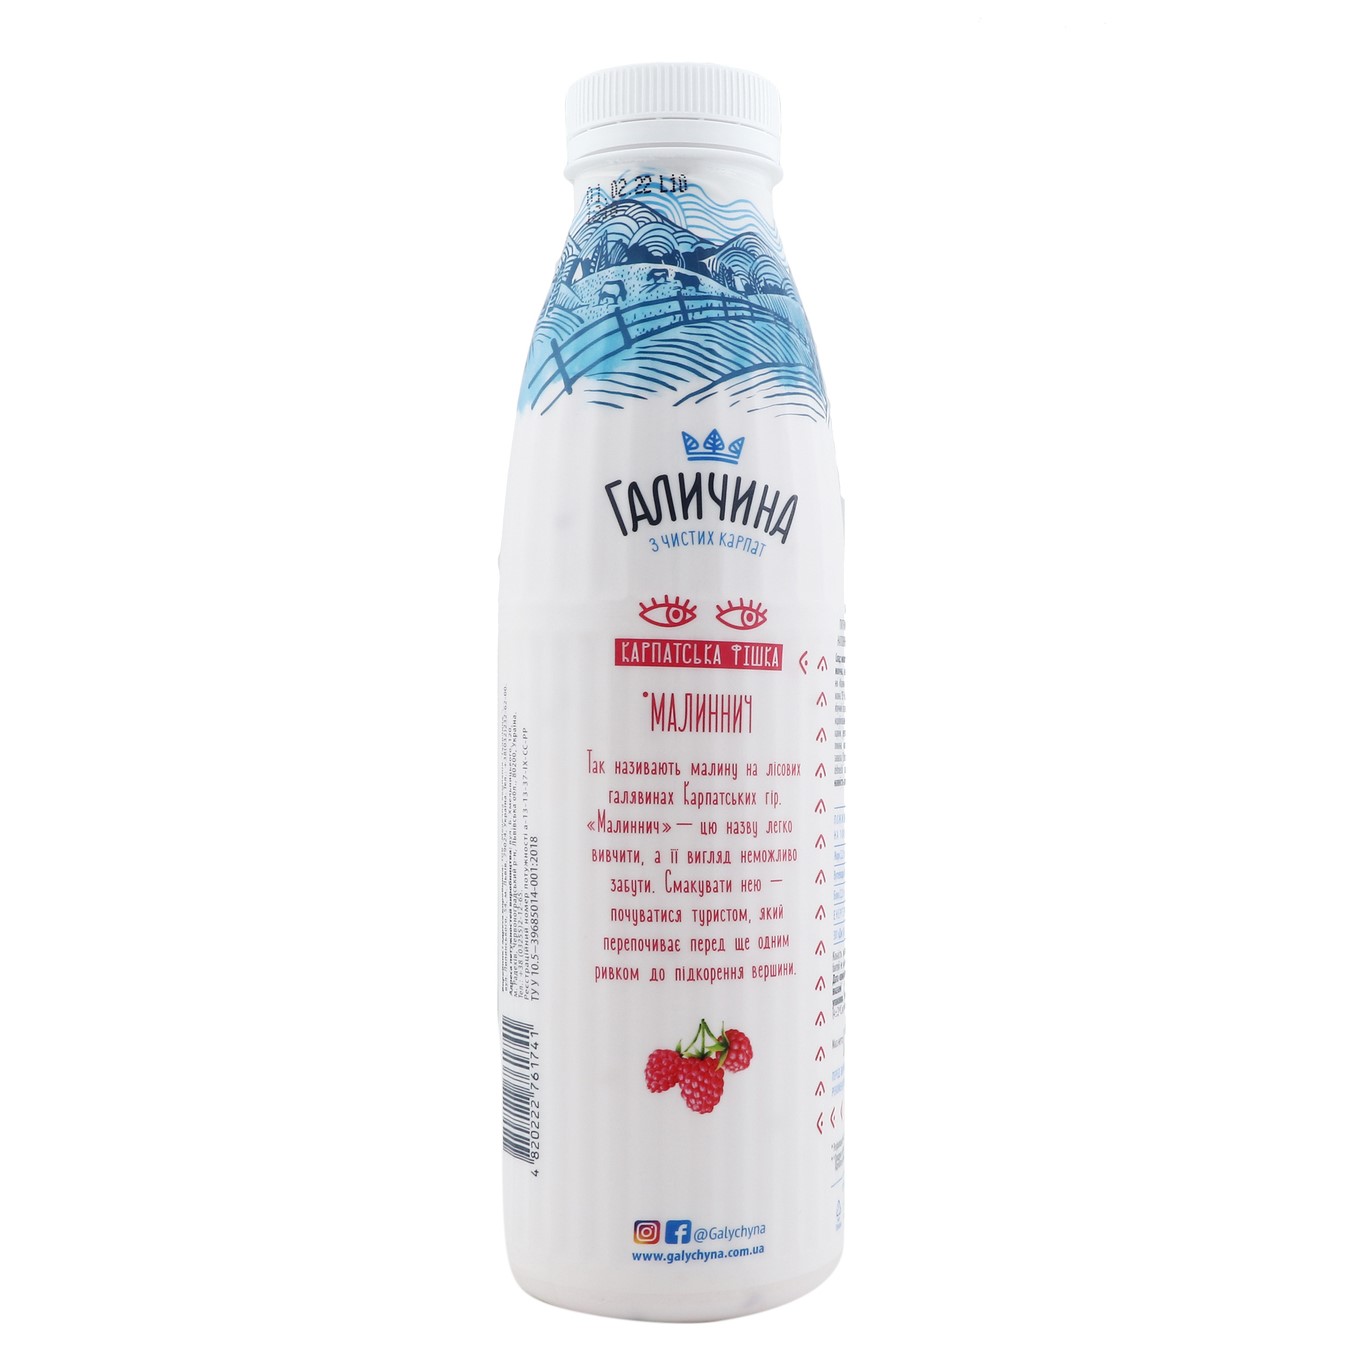 Galicia Yogurt Raspberry-pomegranate 2.2% 550g 2